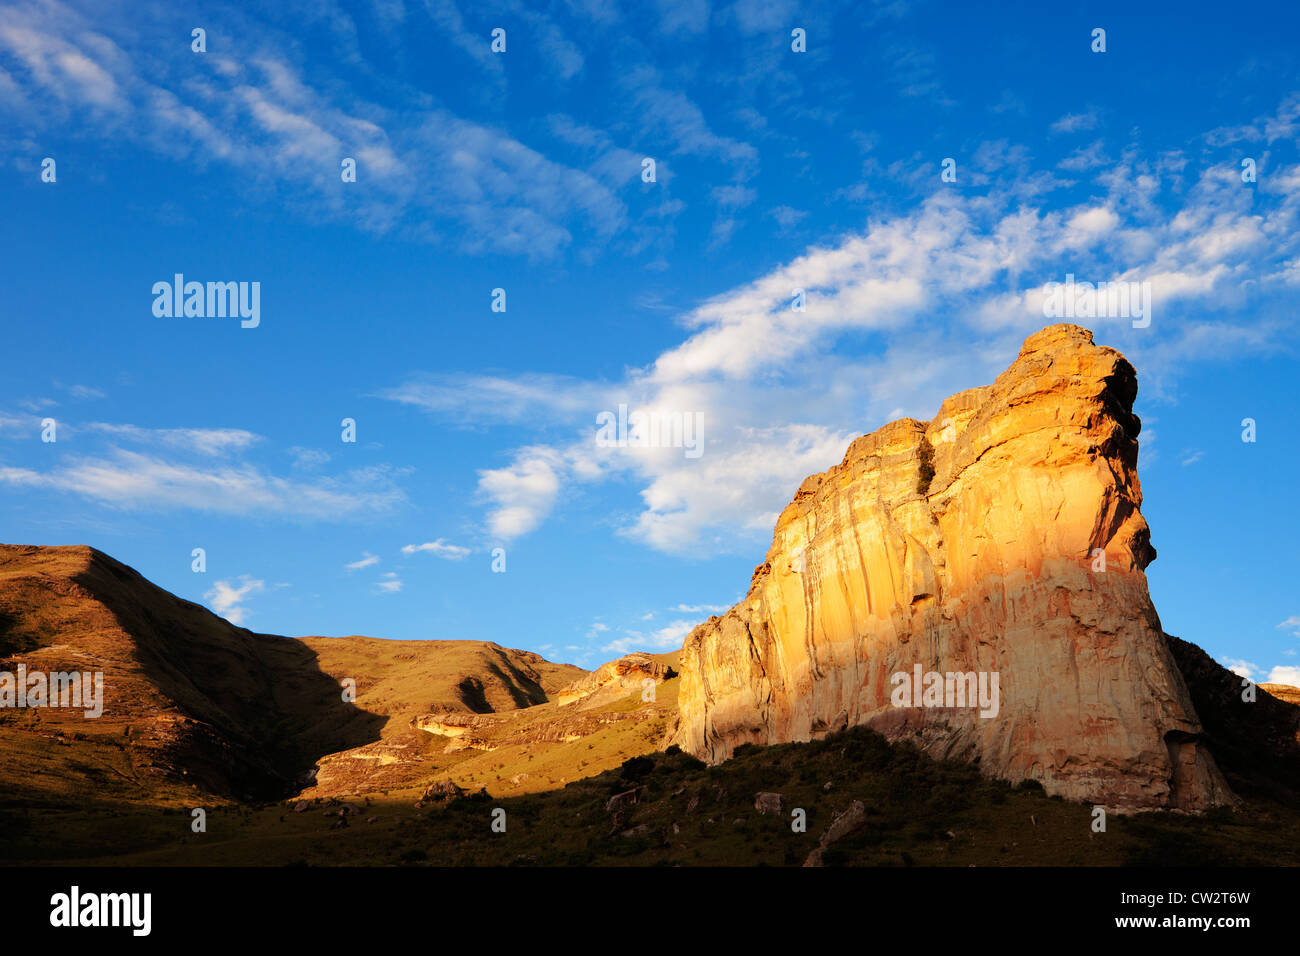 Brandwag Rock in the Golden Gate Highlands National Park.Sud Africa Foto Stock